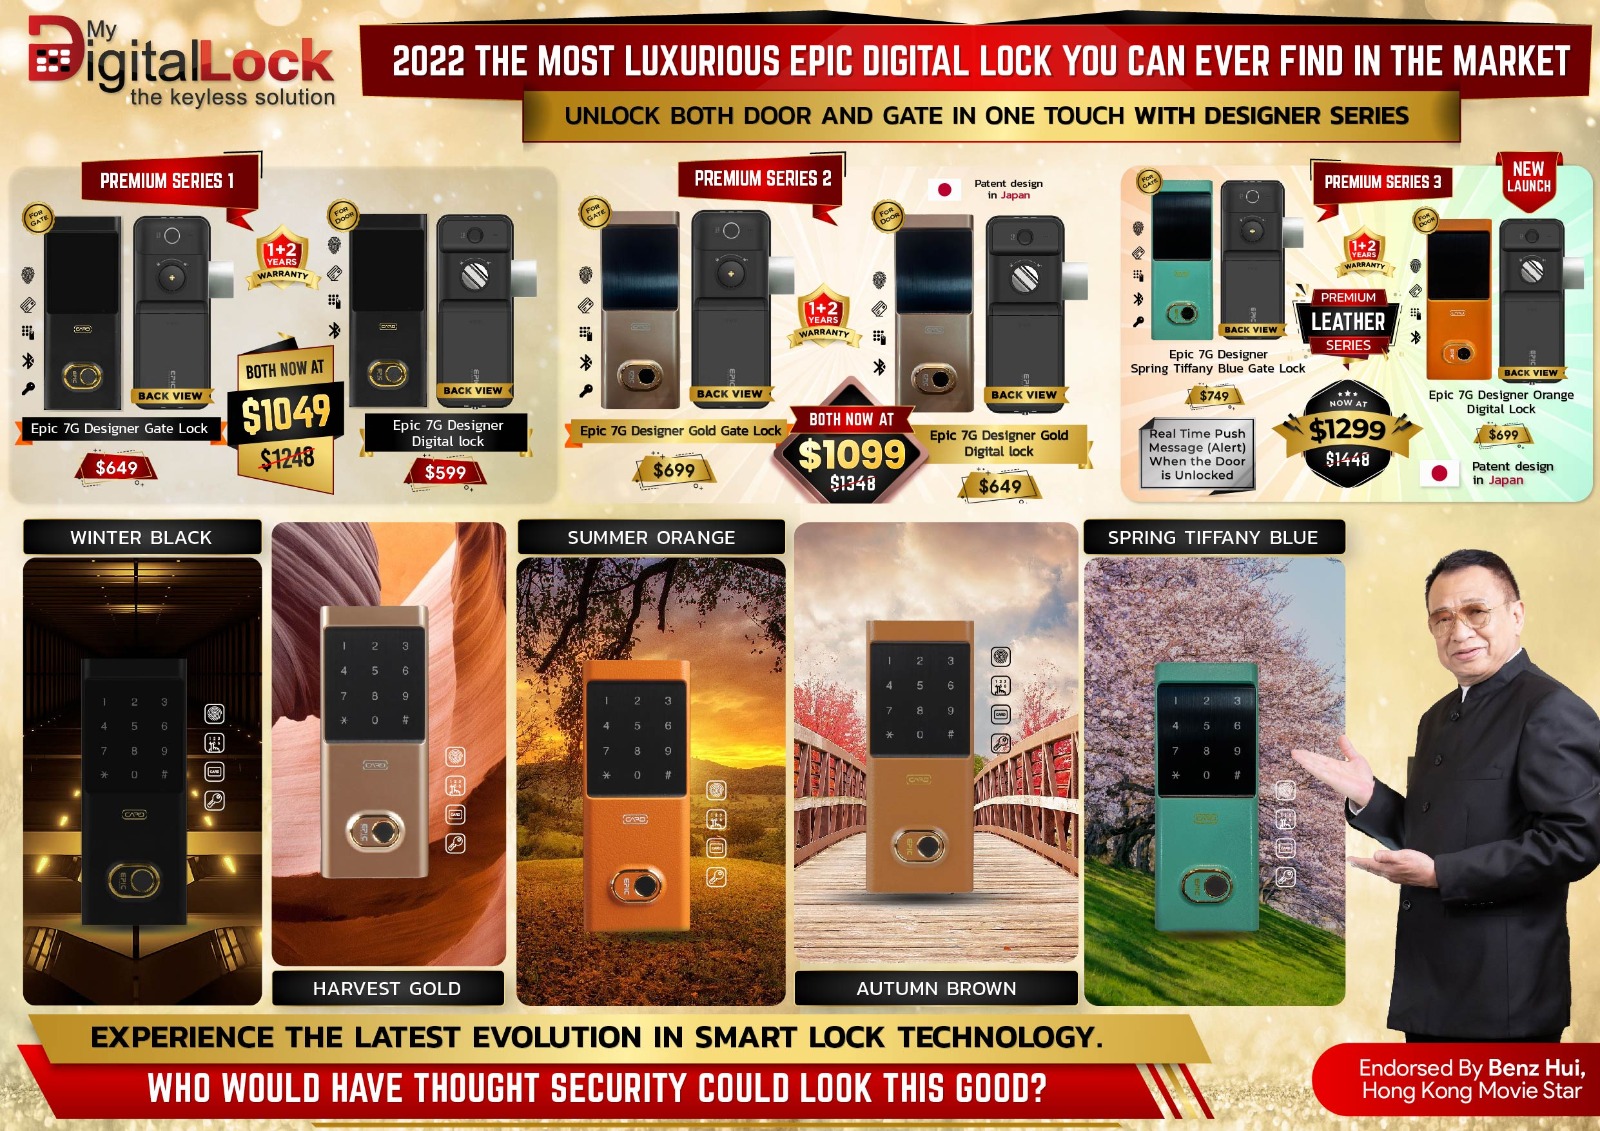 My-Digital-Lock-EPIC-Designer-Series-Digital-Lock